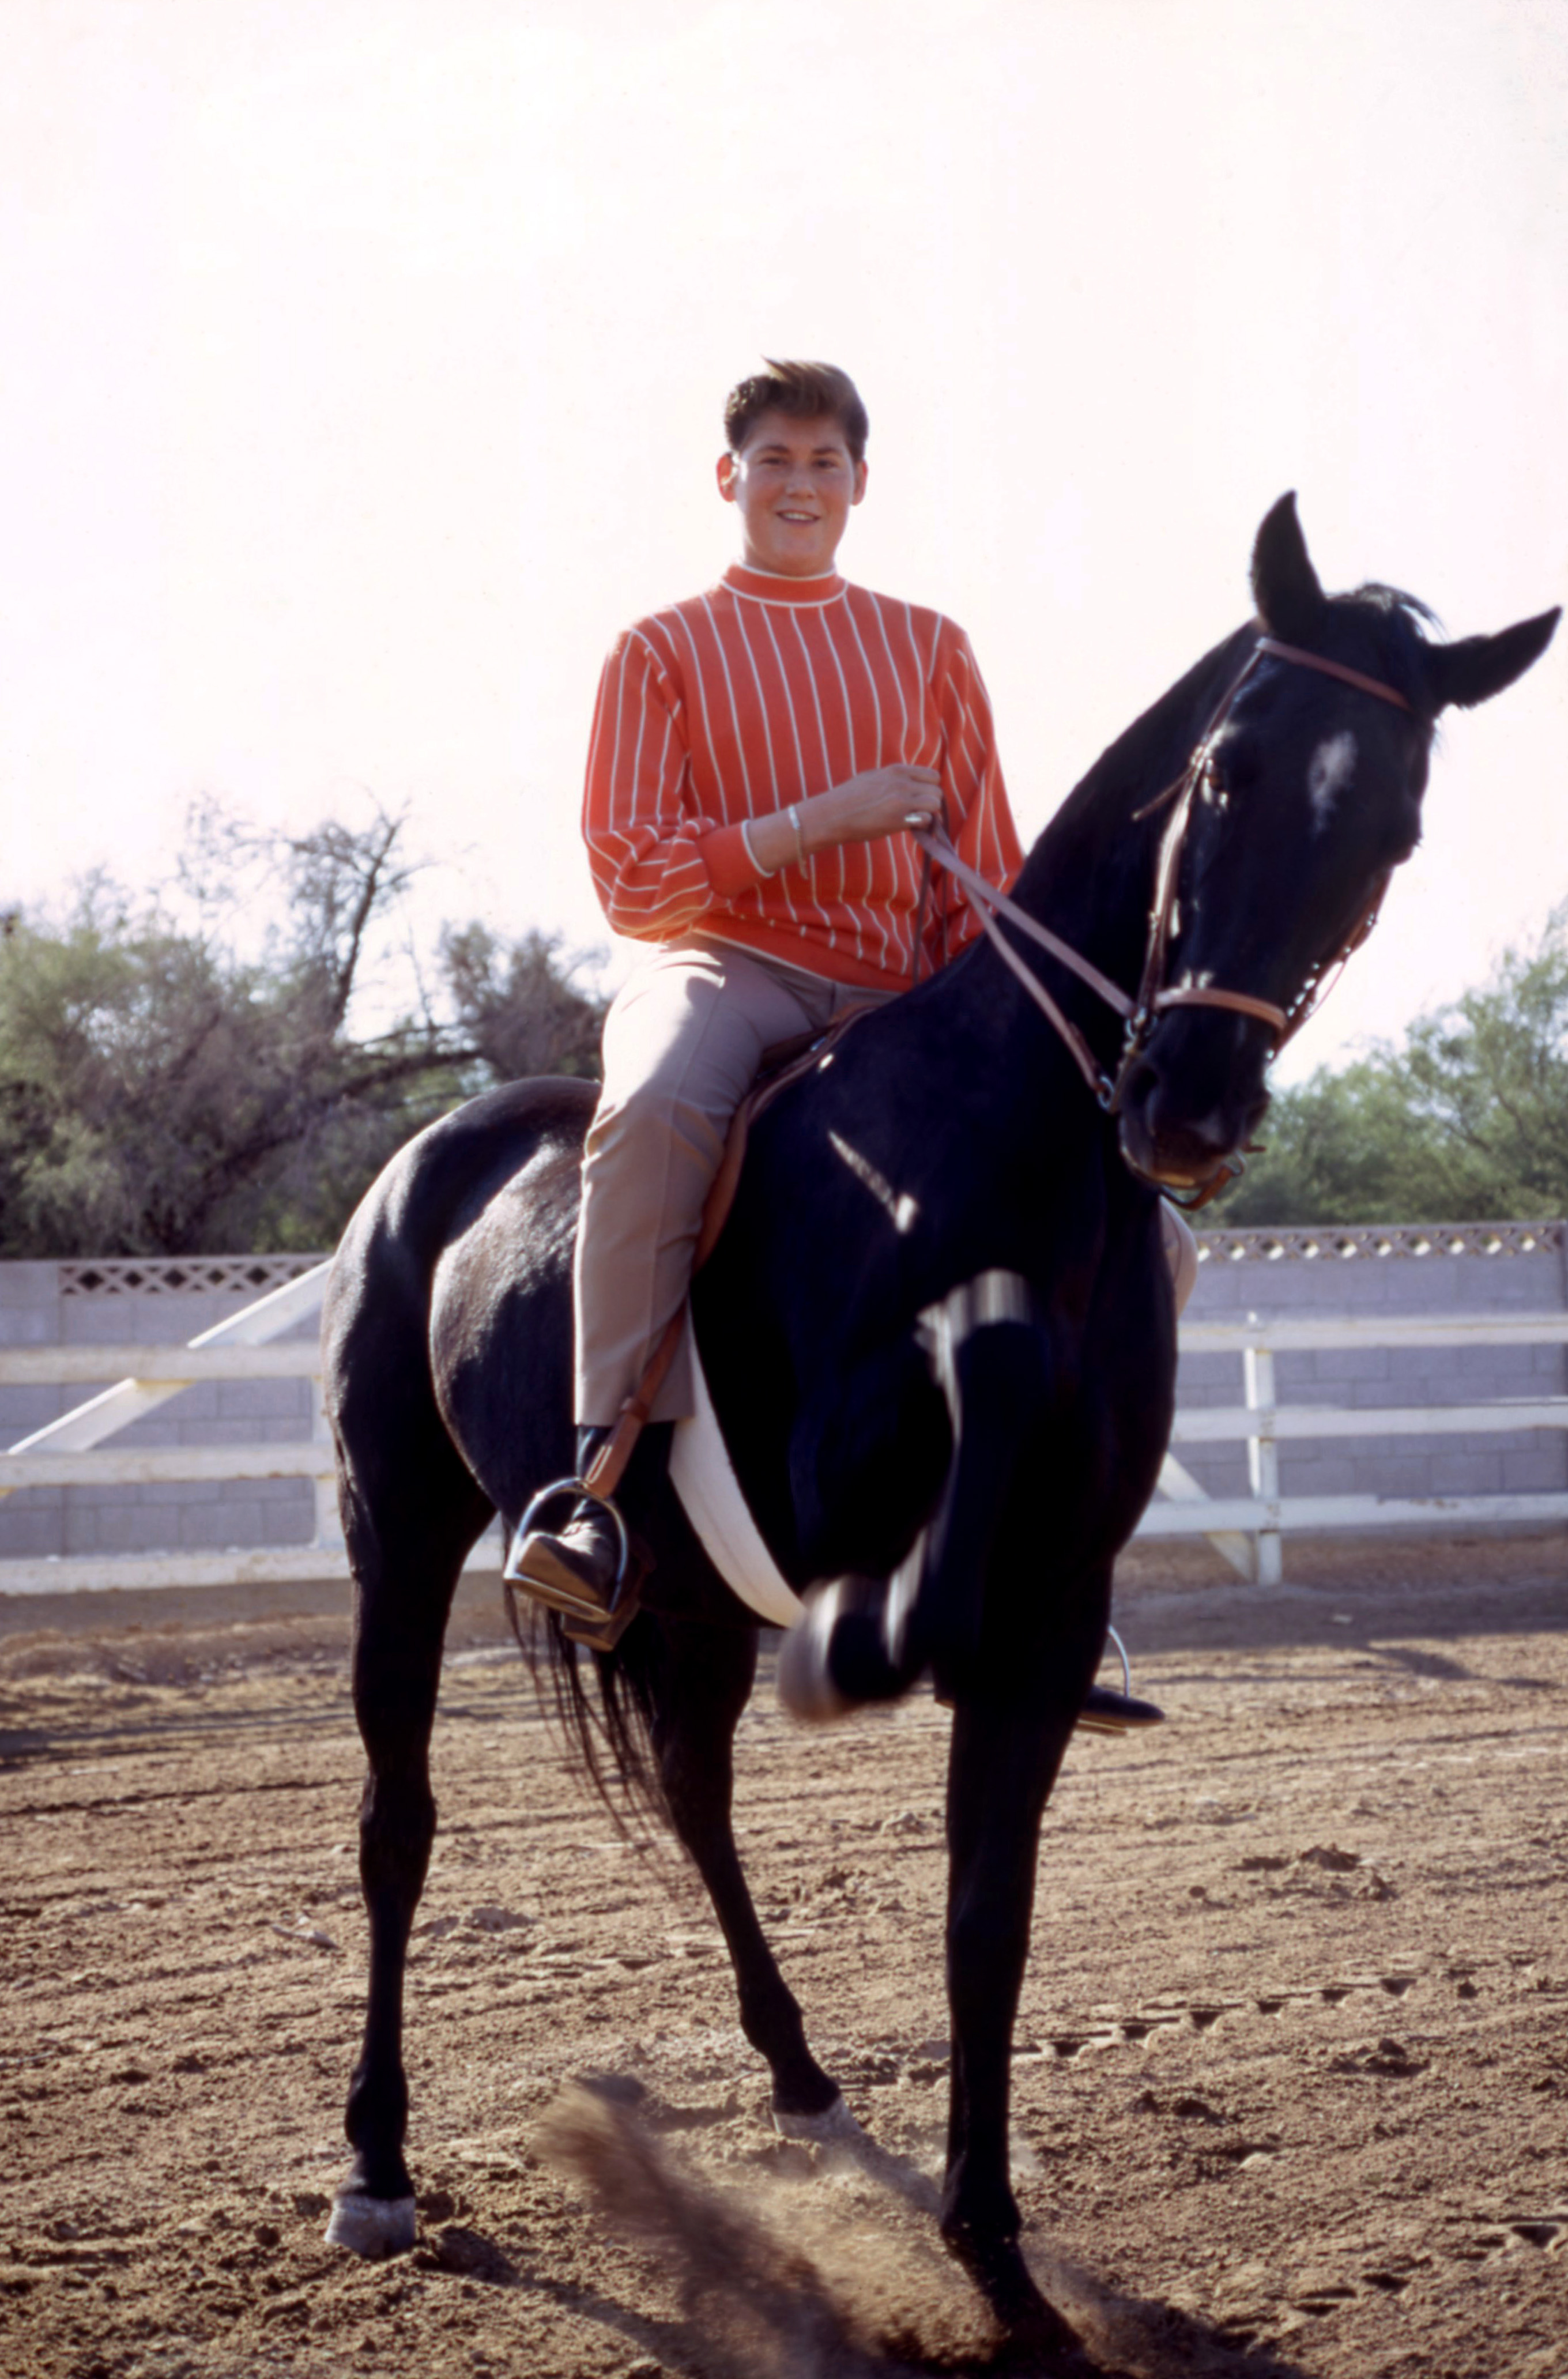 Wayne Newton rides on his horse on May 15, 1969 at his Casa de Shenandoah Ranch in Las Vegas, Nevada | Source: Getty Images